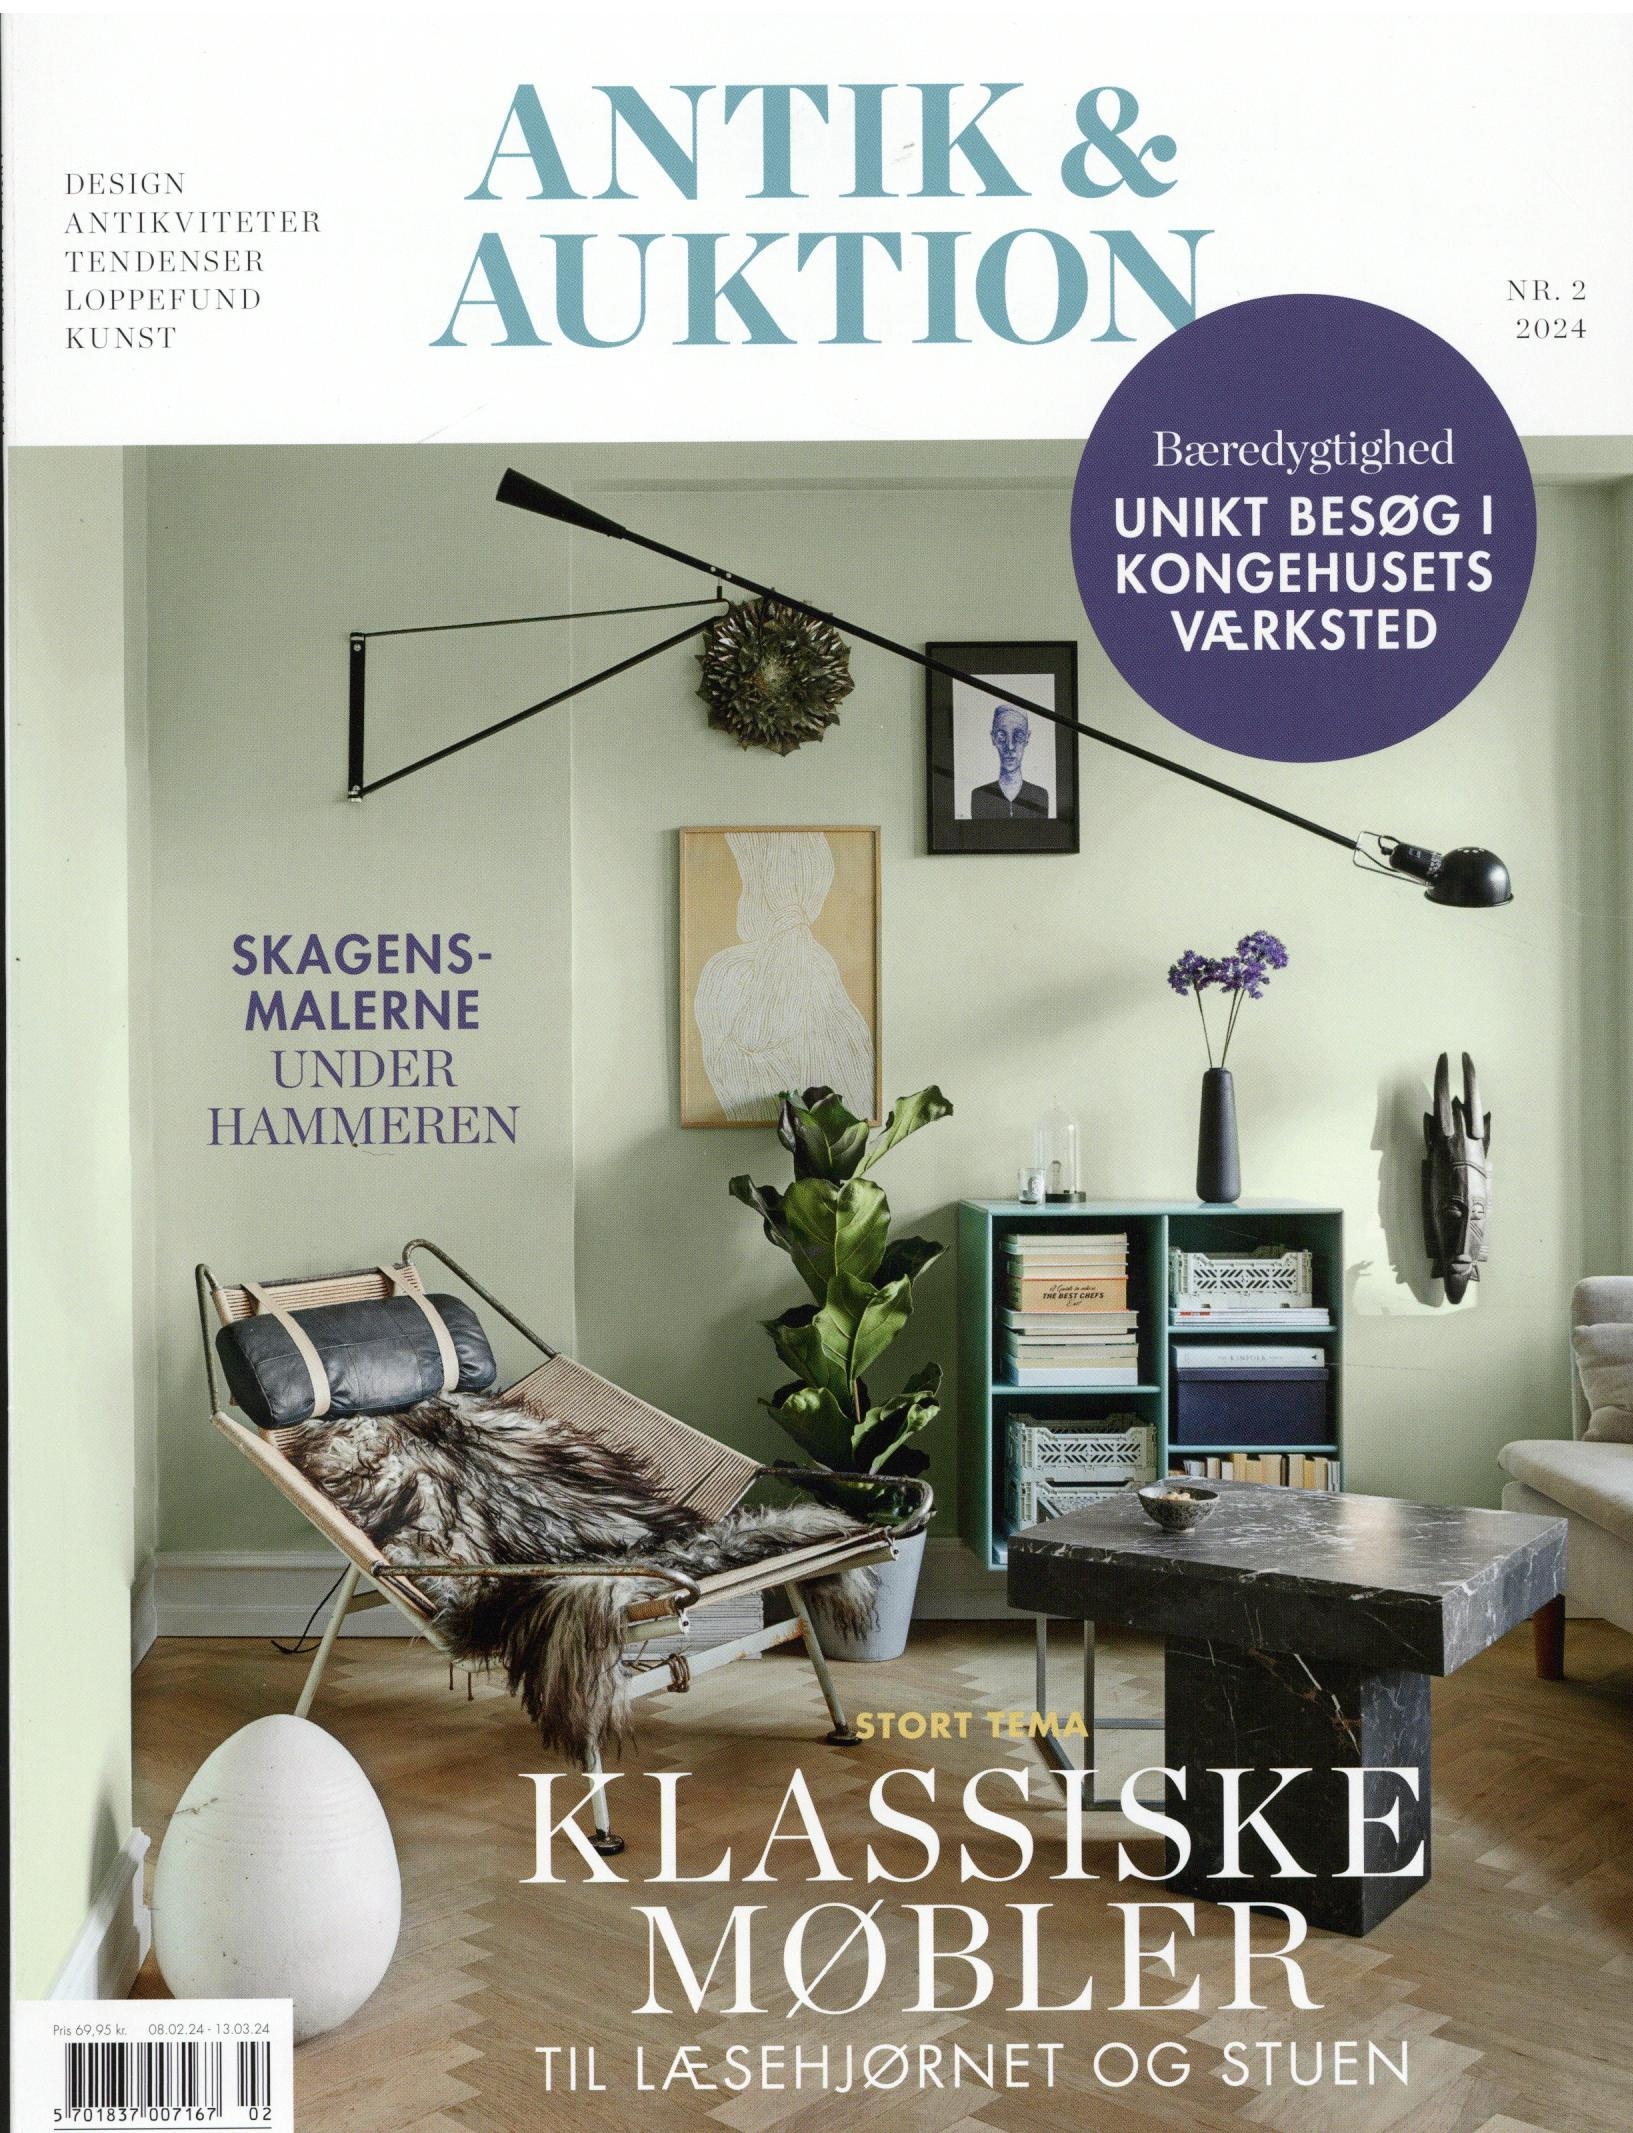 Antik & Auktion (DK)